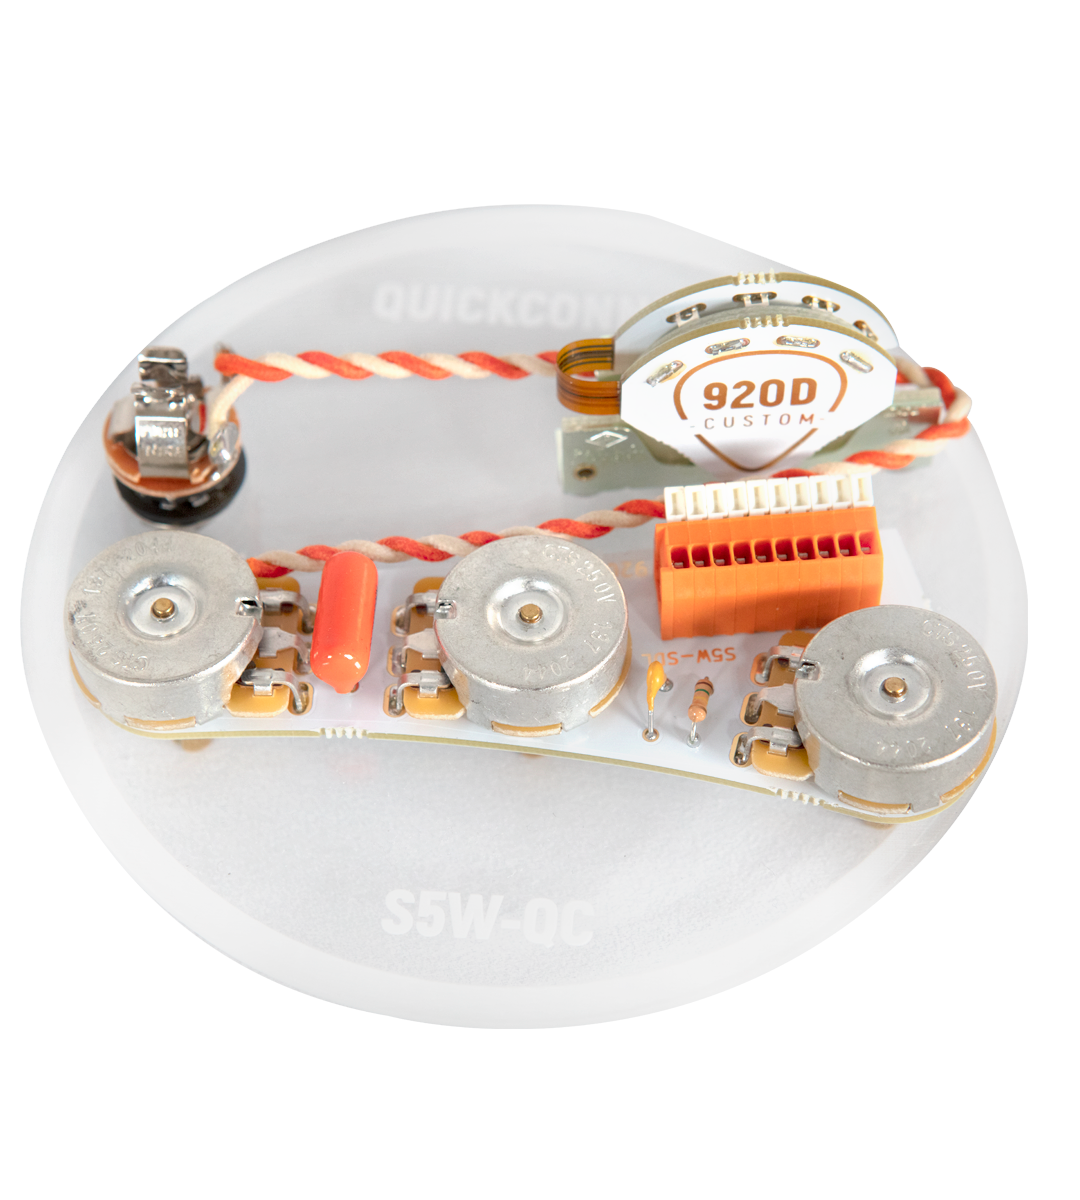 SSS Strat 5-Way QuickConnect Wiring Harness (Solderless)